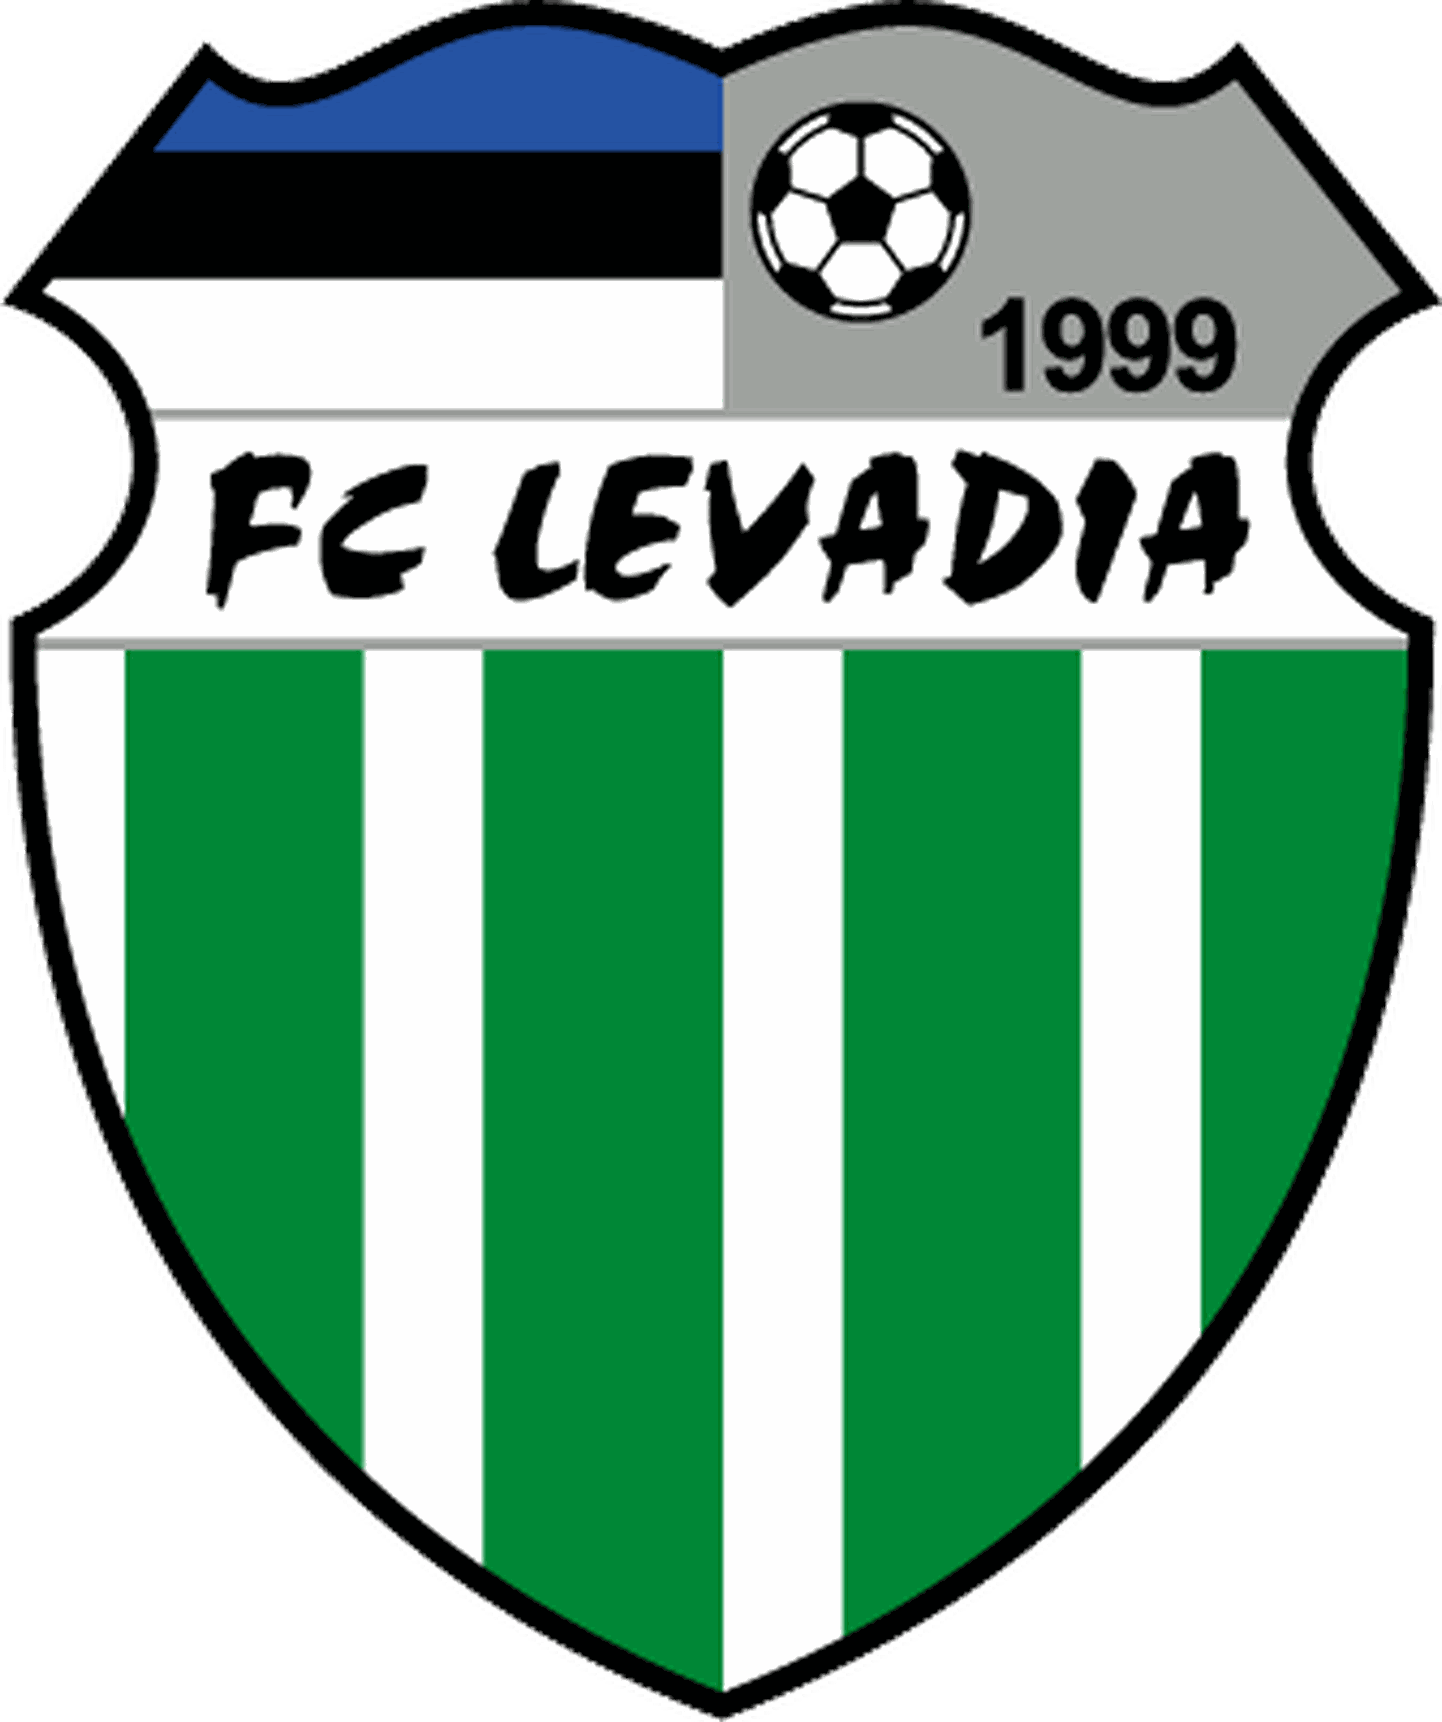 Tallinna Levadia logo.